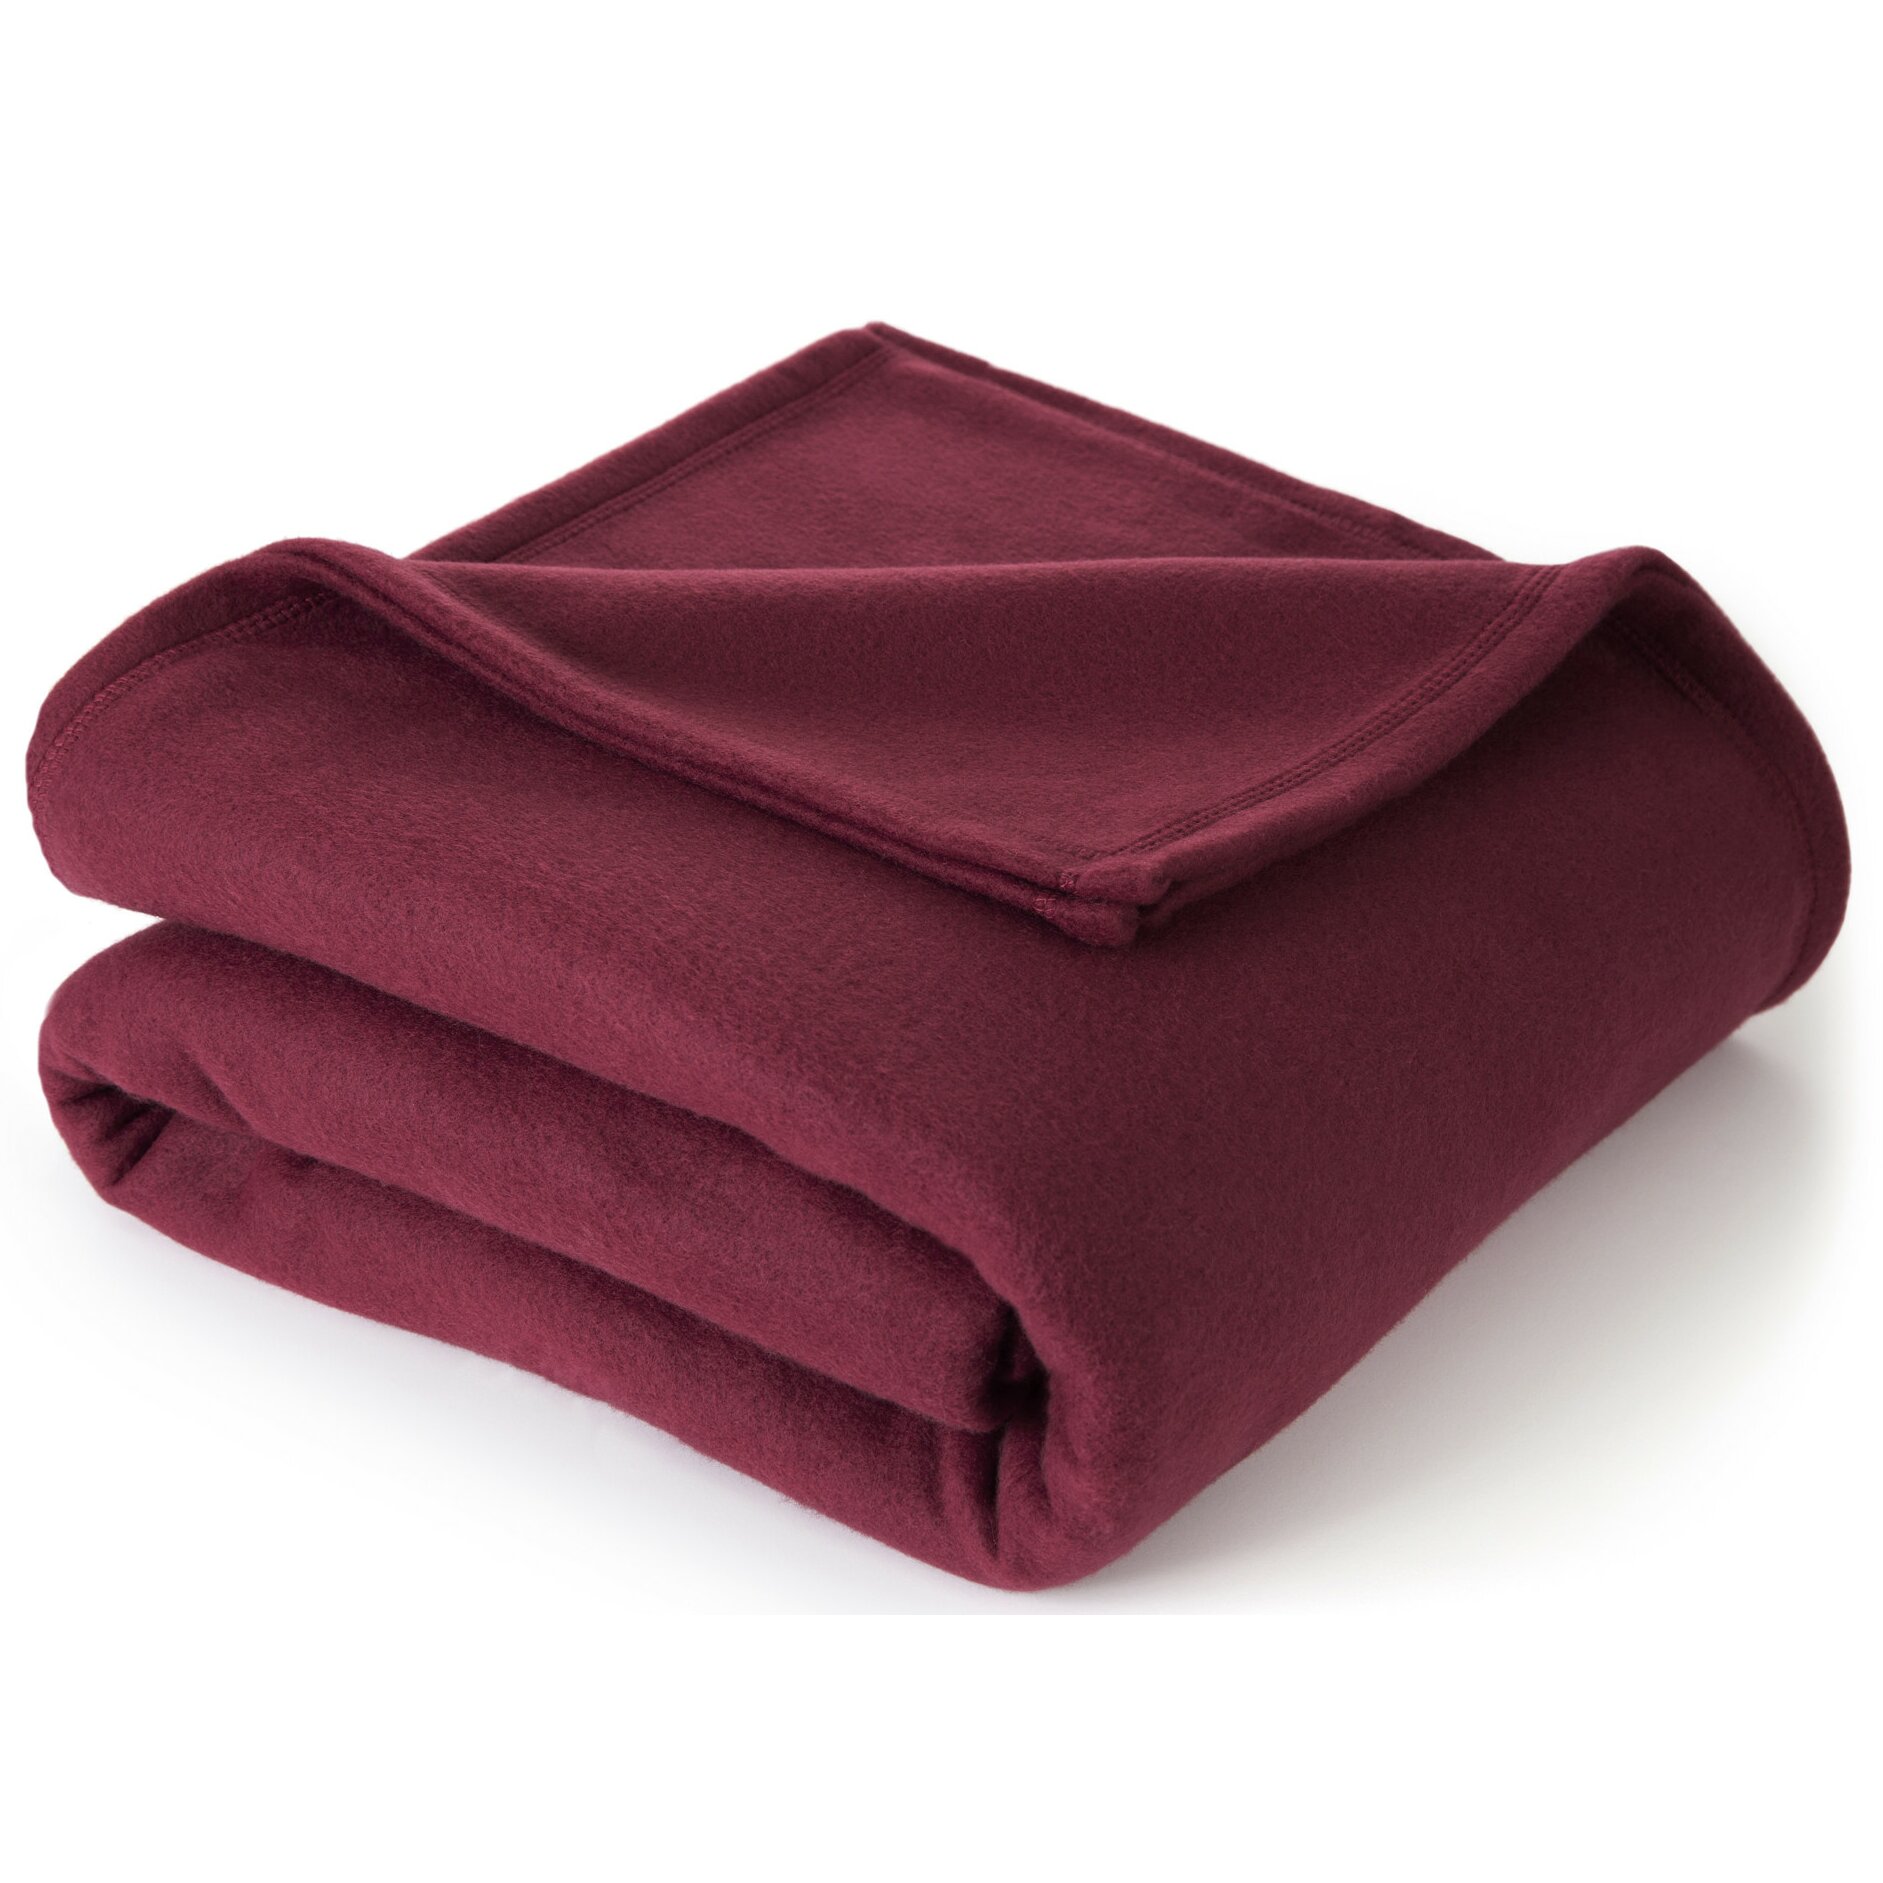 Martex Super Soft Fleece Blanket | Wayfair